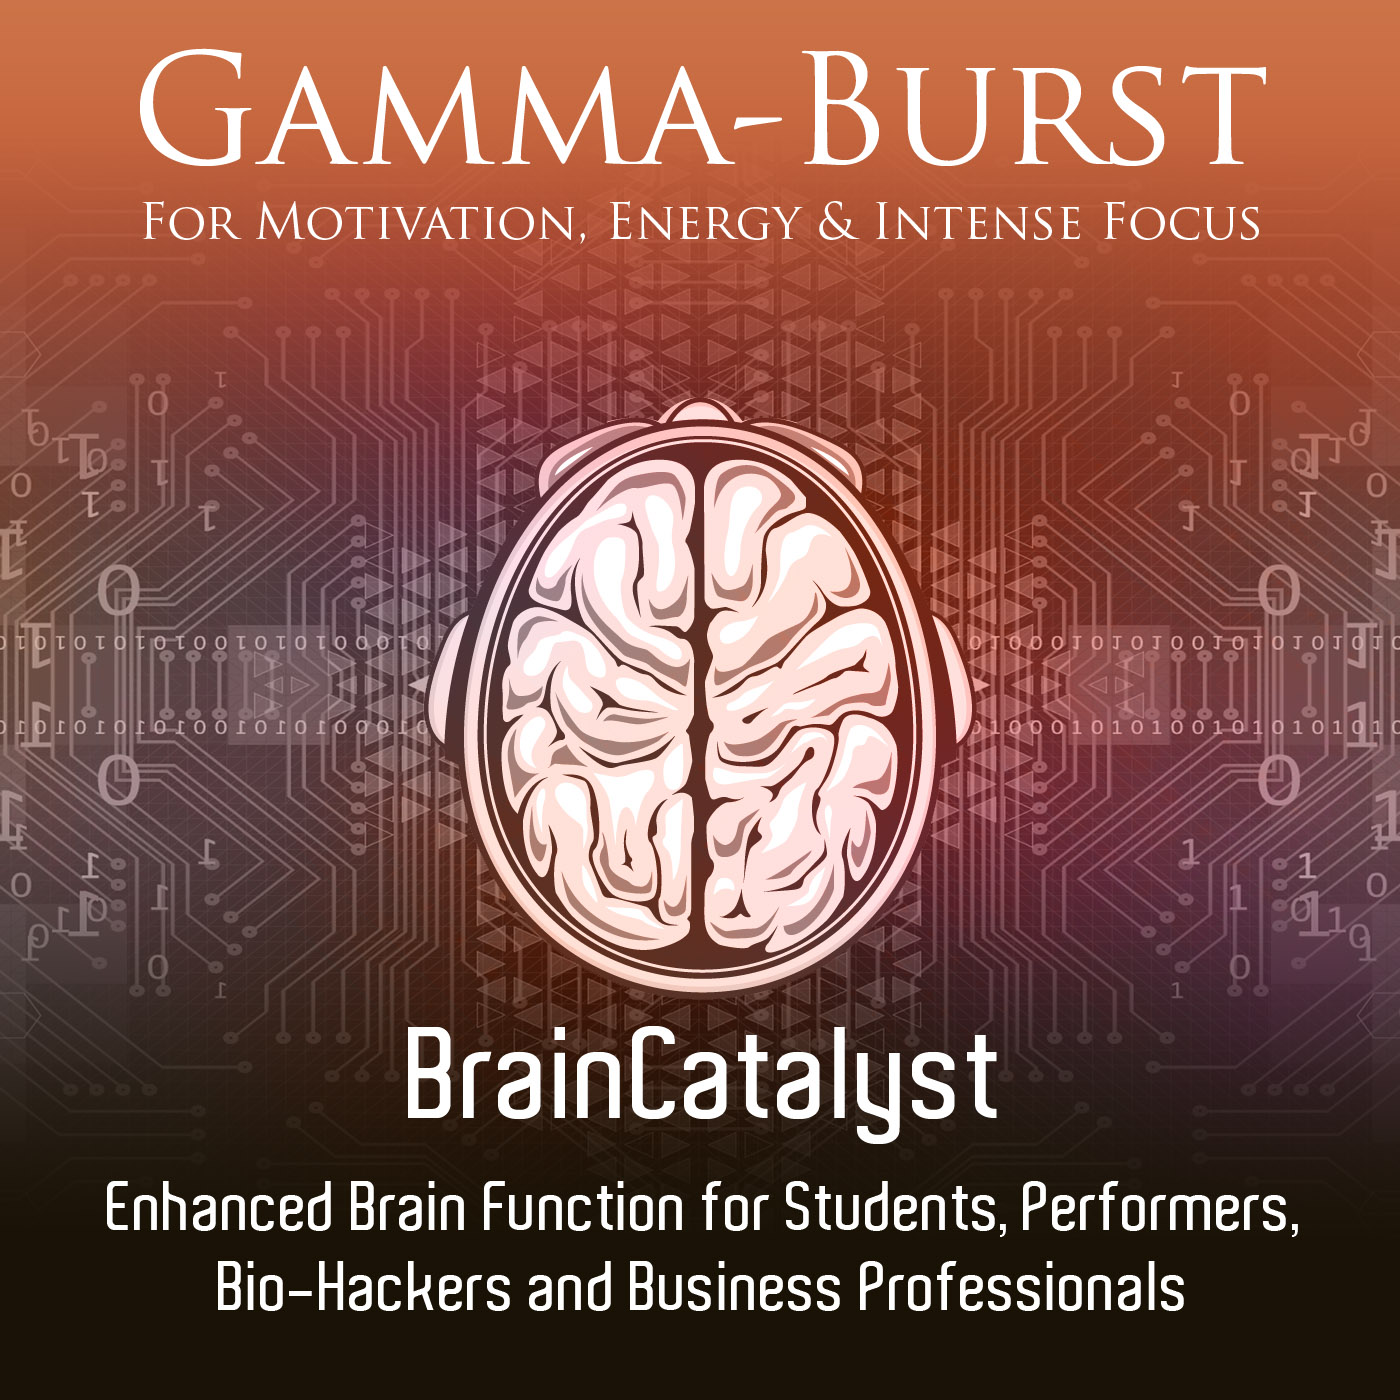 Gamma-Burst (Motivation • Energy • Intense Focus) - iAwake Technologies